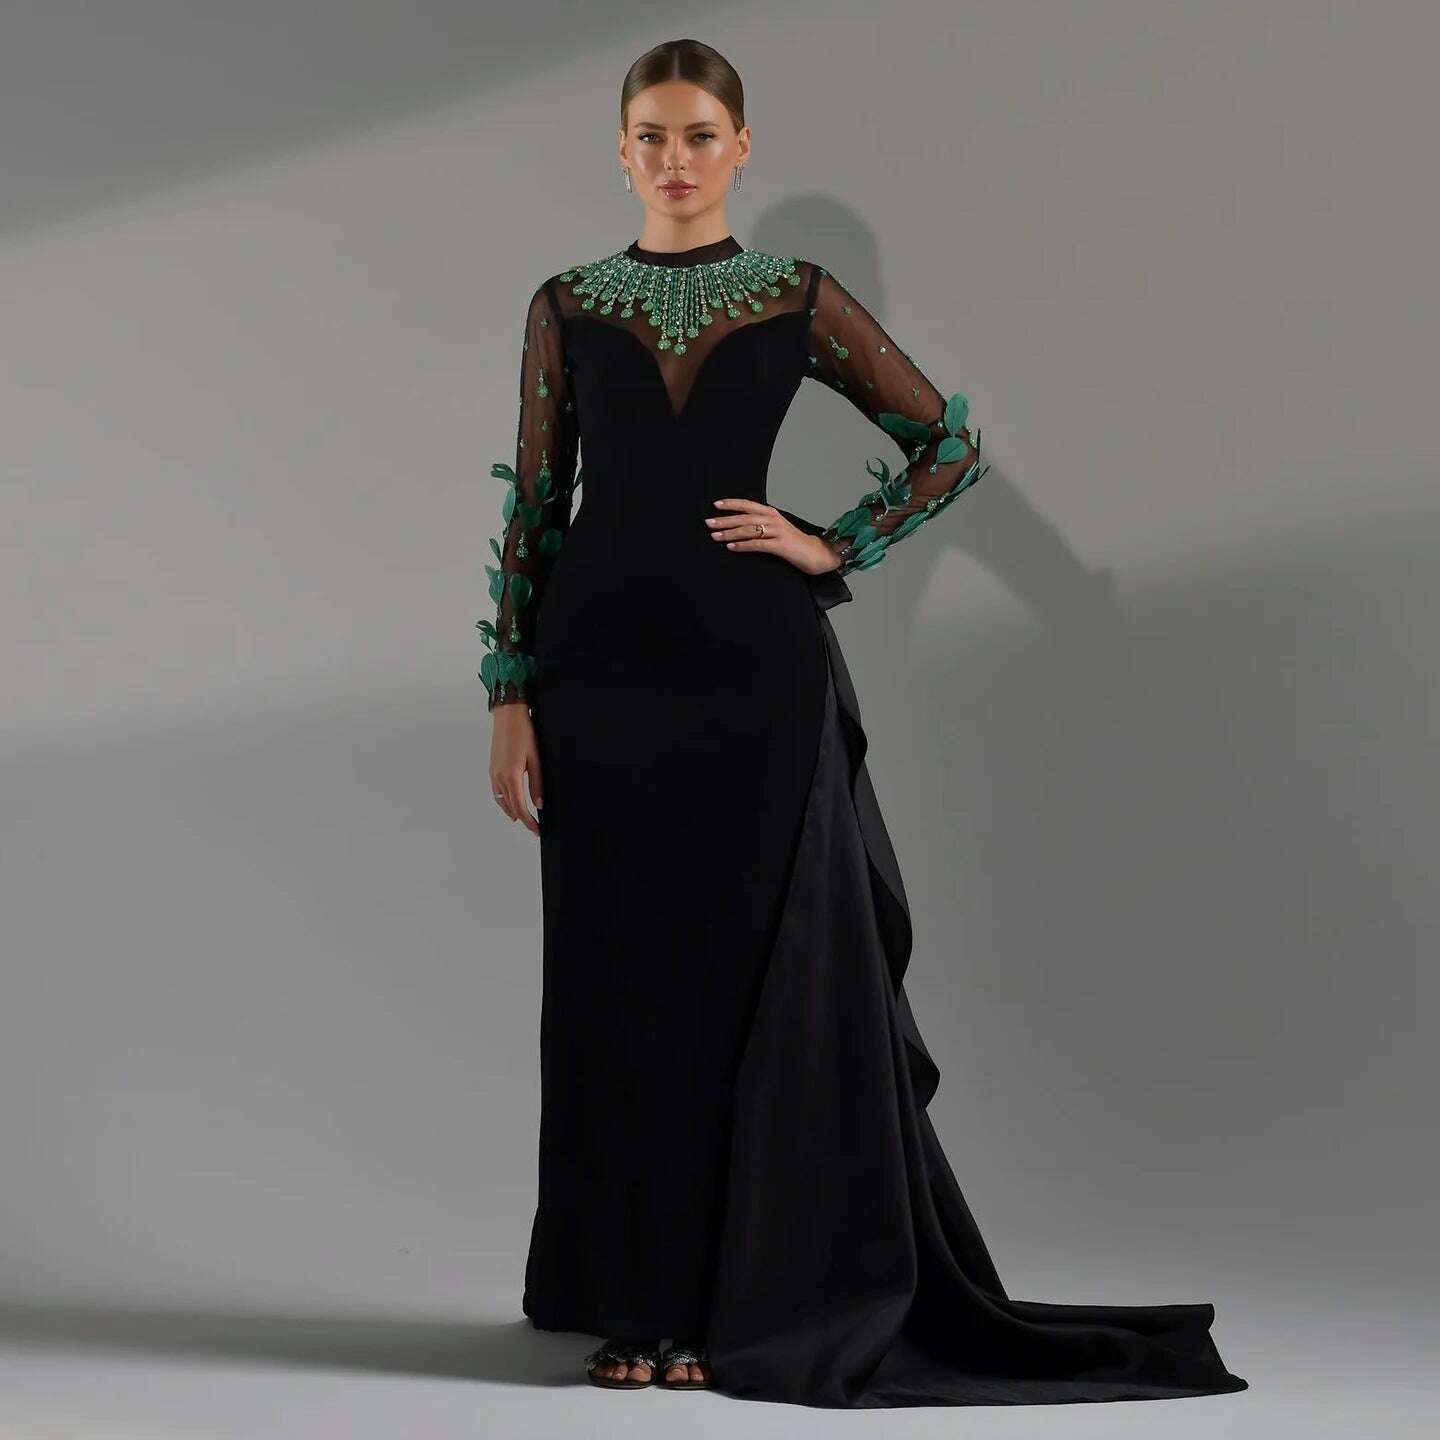 KIMLUD, Sharon Said Luxury Dubai Emerald Green Feathers Black Evening Dress Long Sleeves Saudi Arabia Women Formal Party Gowns SS457, KIMLUD Women's Clothes